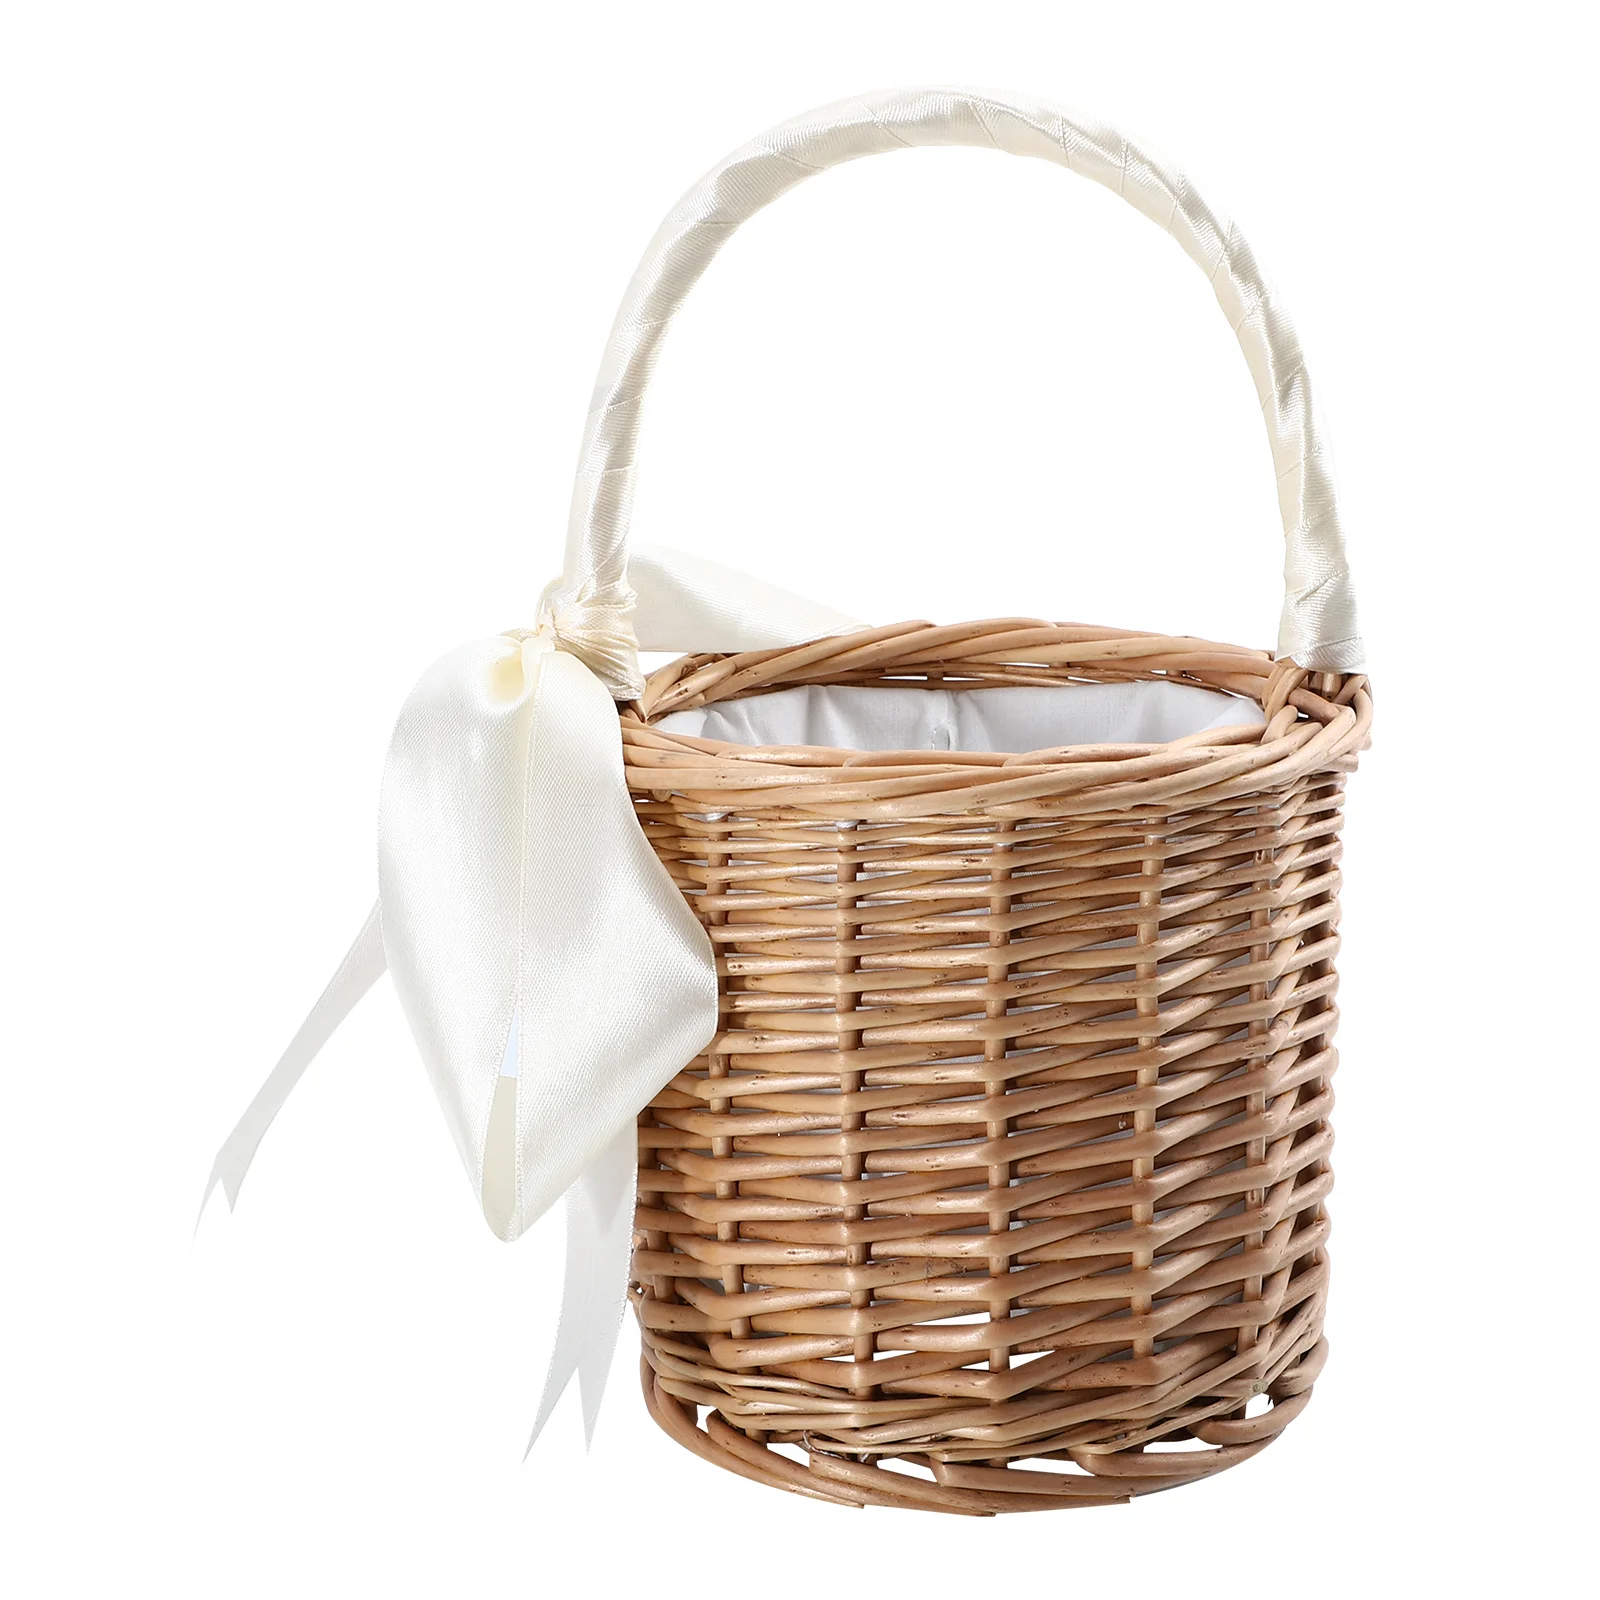 

Basket Handwoven Wicker Flower Hamper Hand-Woven Wooden Weaving Storage Container Women's Baskets